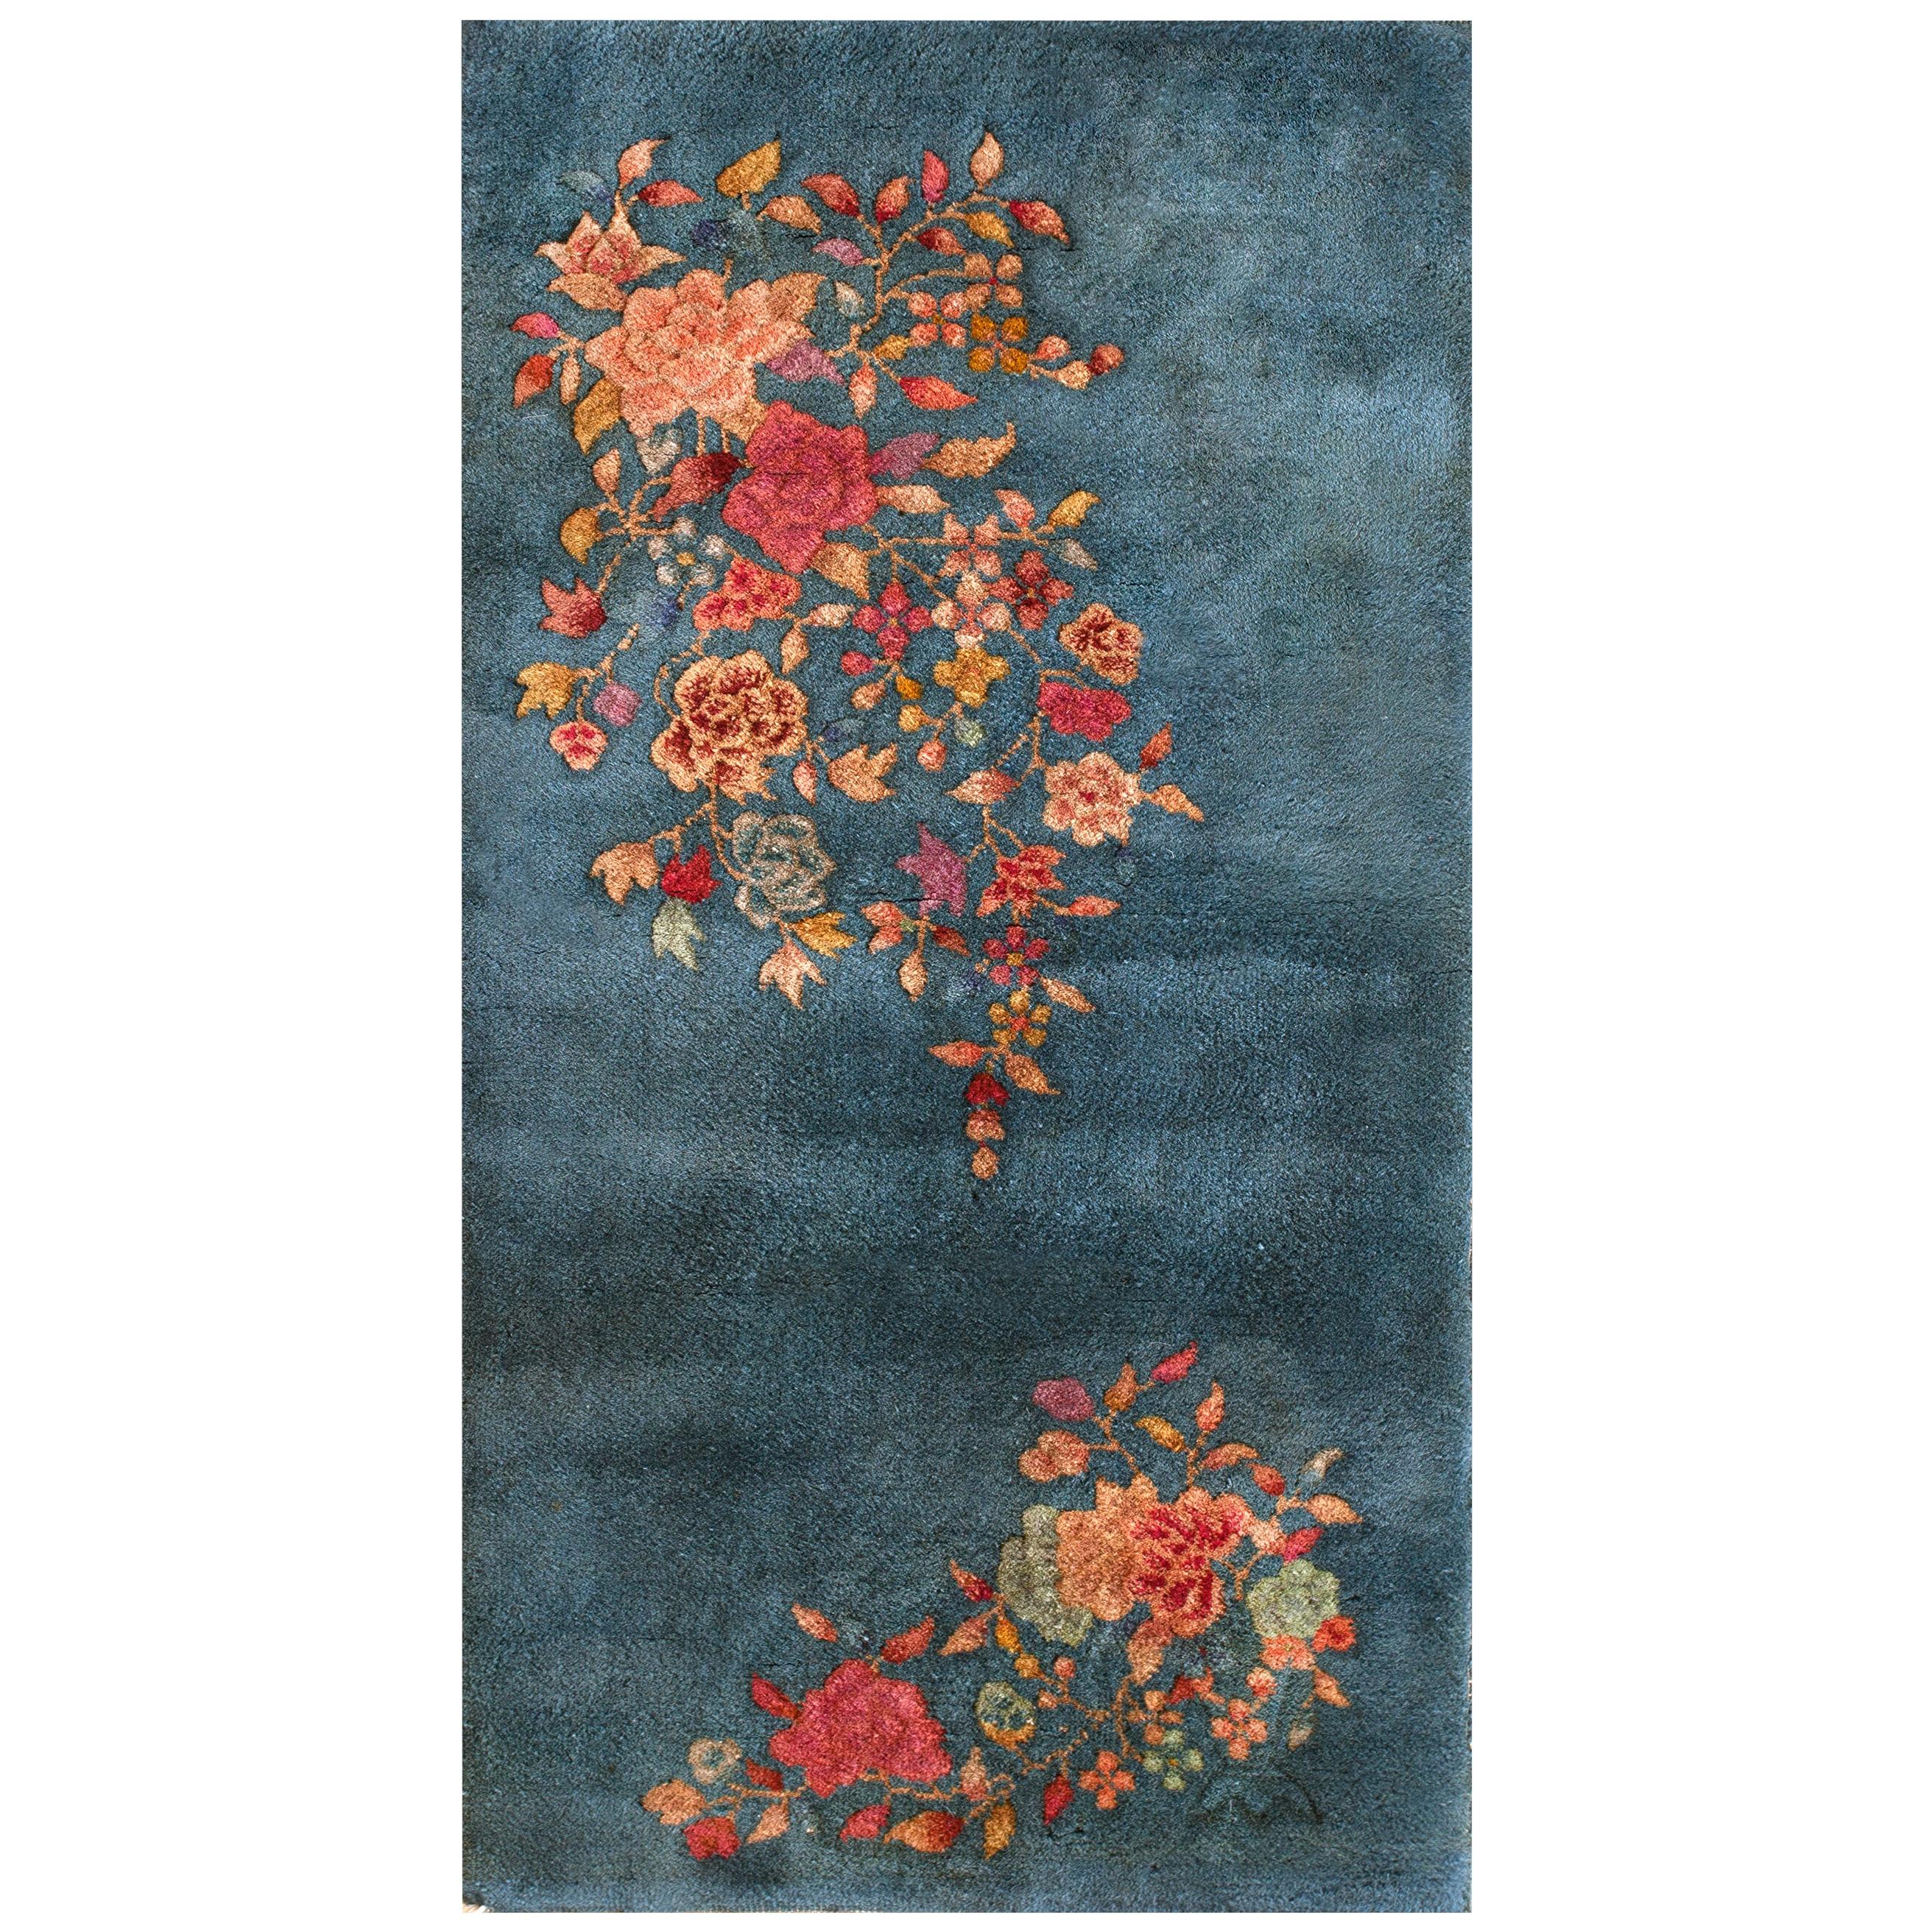 1920s Chinese Art Deco Carpet ( 2' 2" x 3' 10" - 66 x 116 cm )